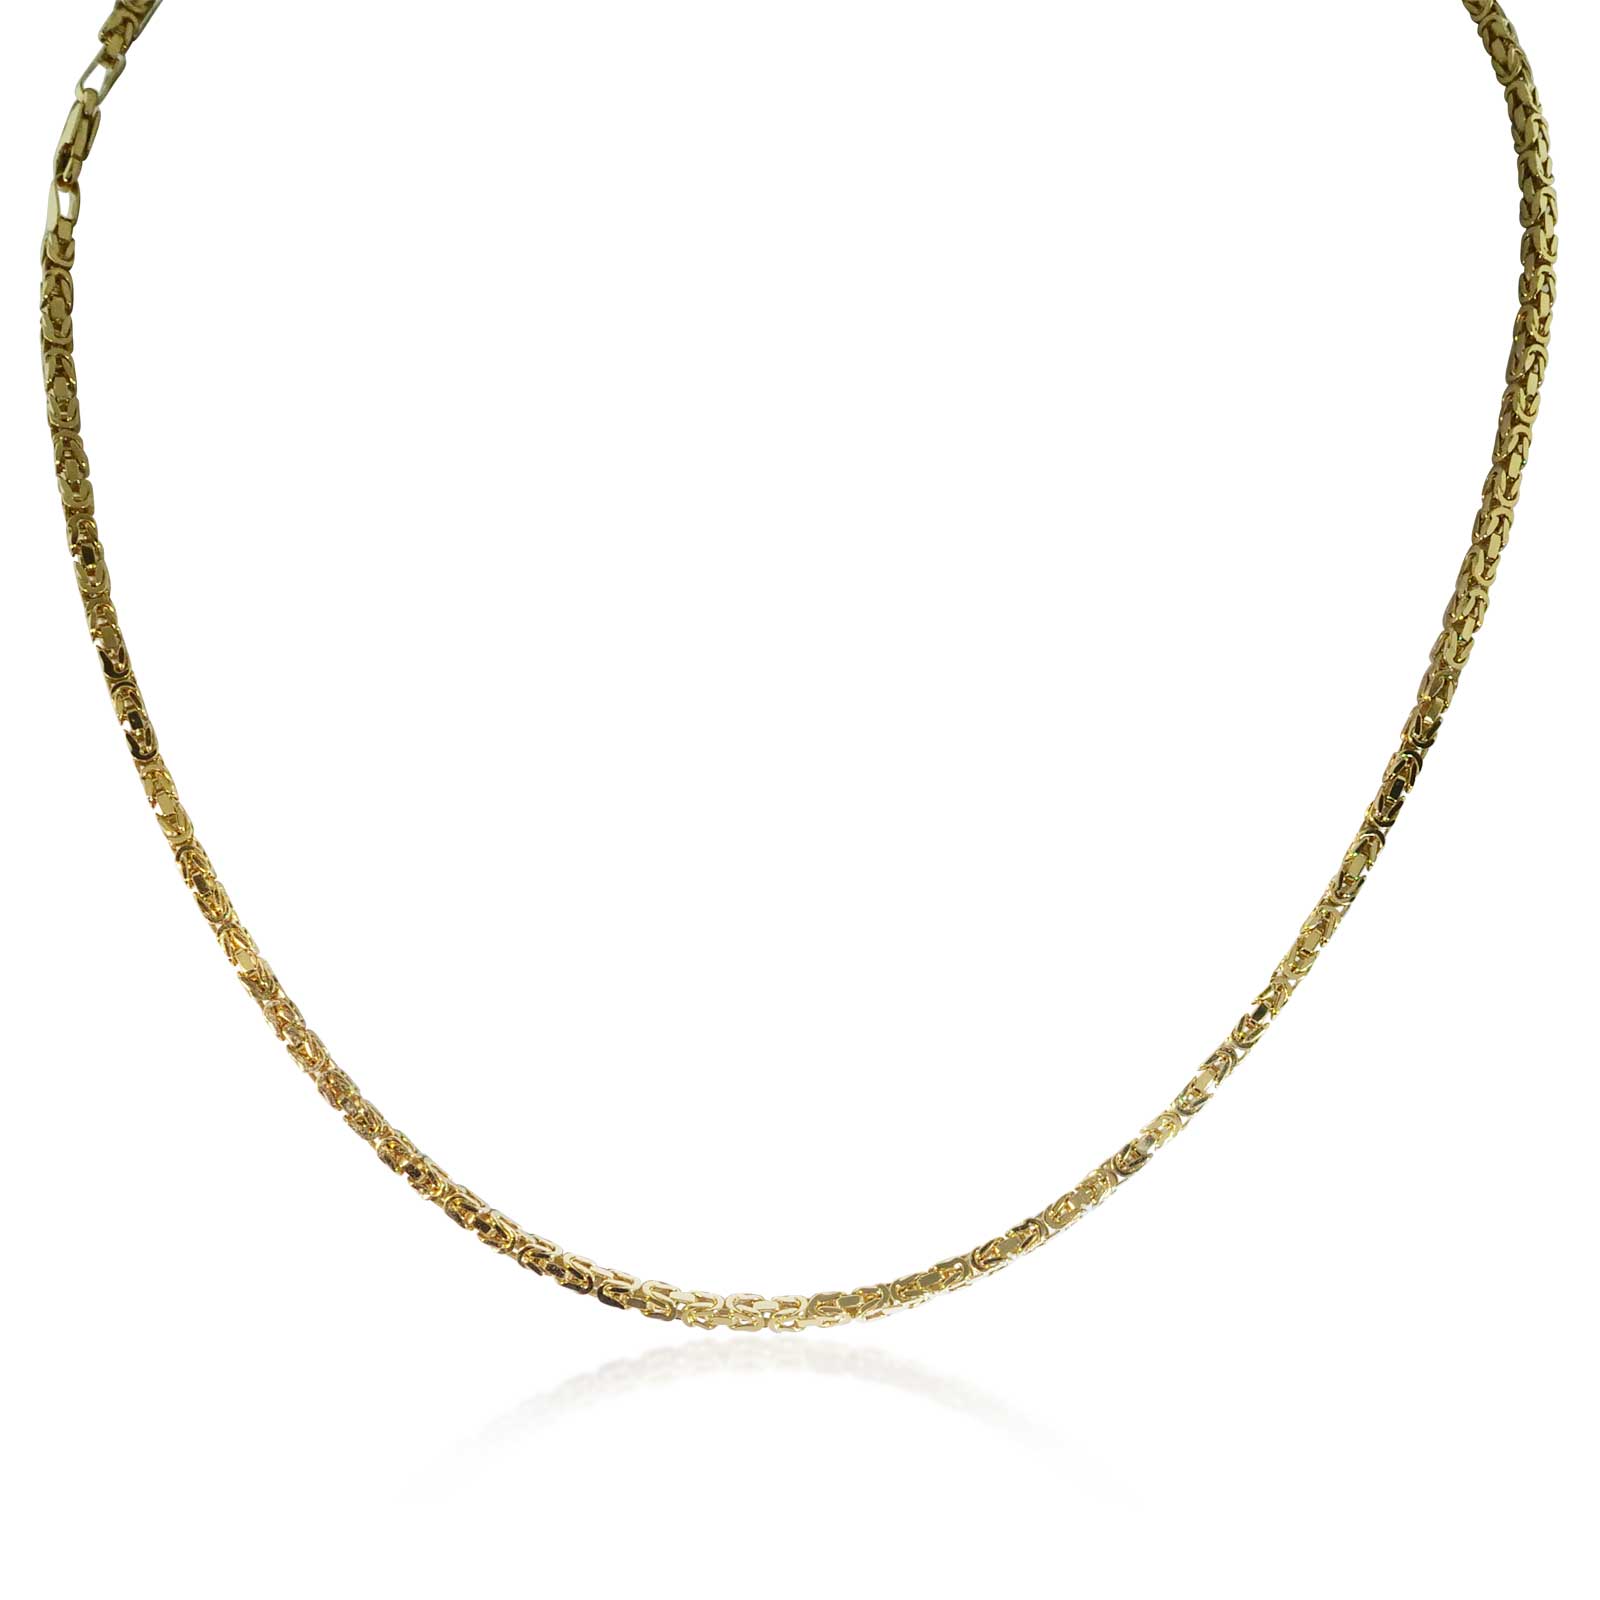 Massives Goldcollier, Königskette in 14kt Gelbgold 50cm